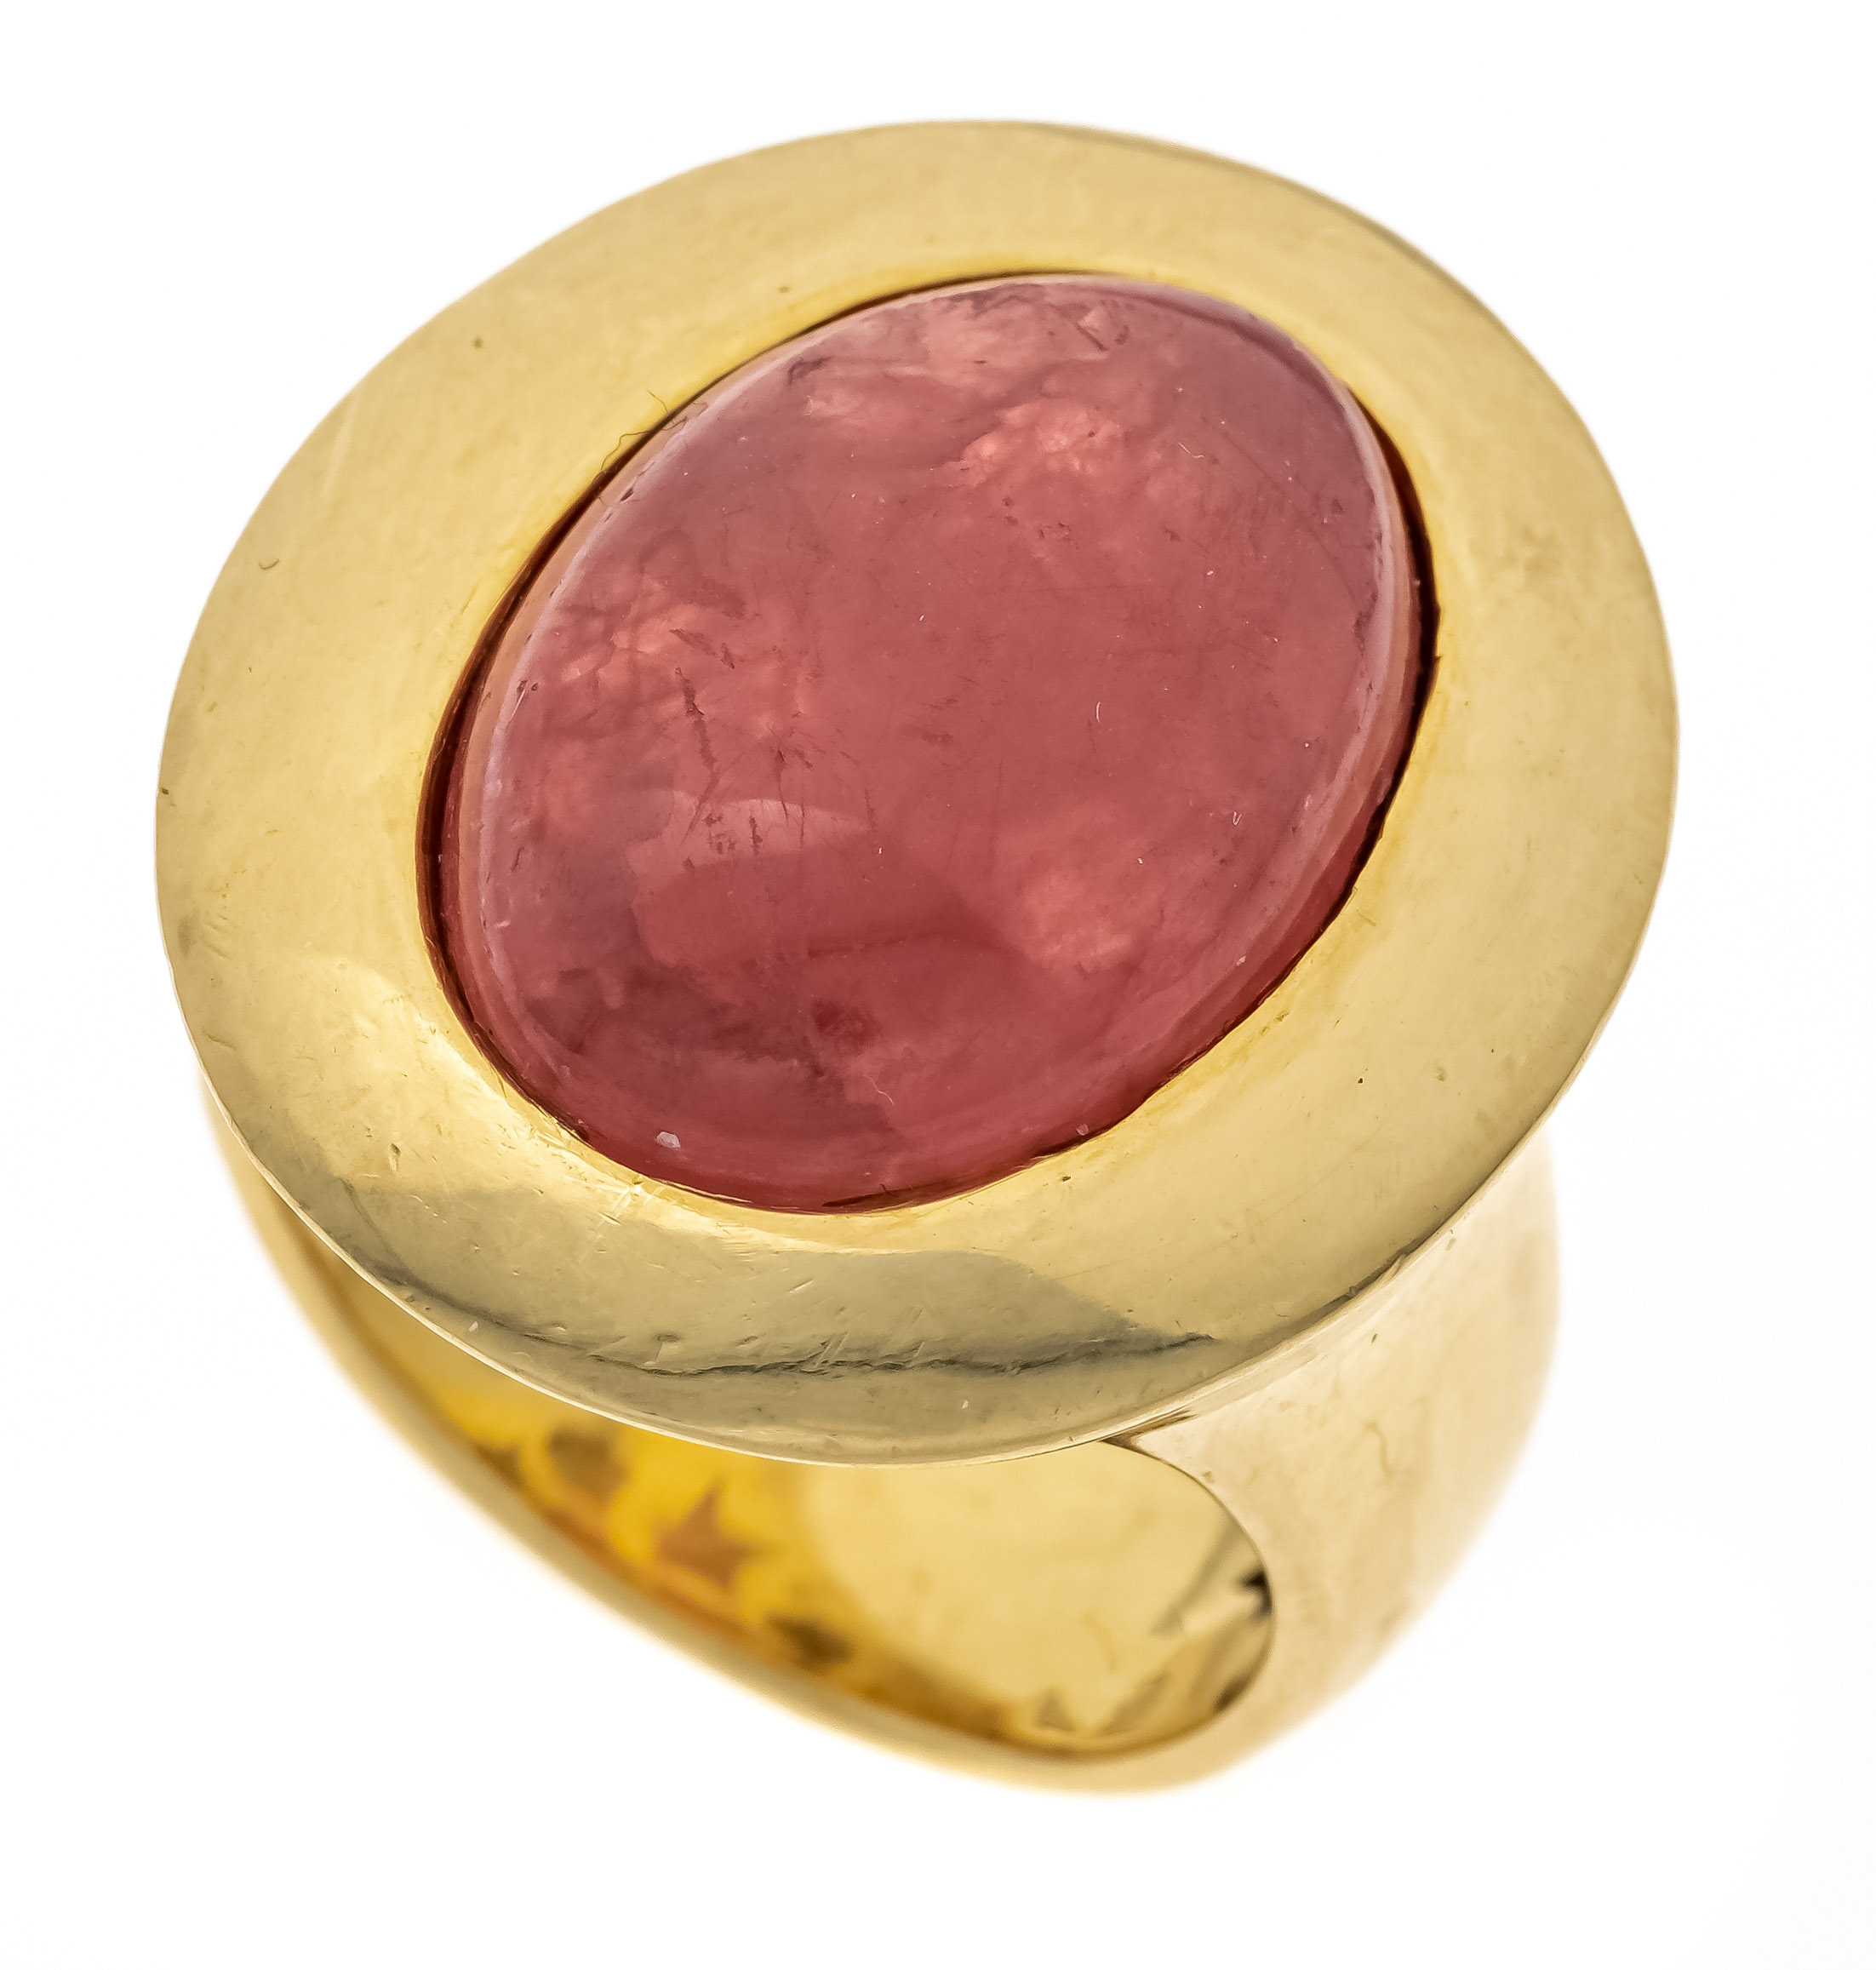 Tourmaline ring GG 750/000 with one oval tourmaline cabochon 17,5 x 12,9 mm, yellowish pink,